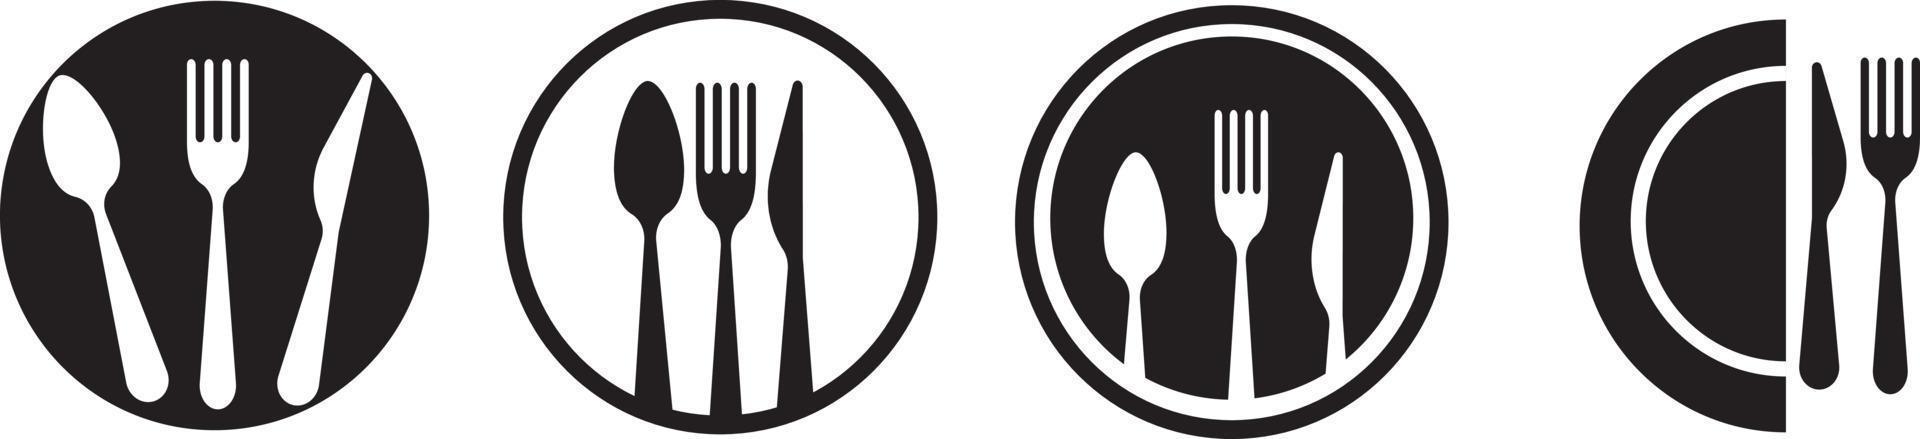 lepel, vork, mes en plaat icon set, menu logo, silhouet van bestek. servies vector illustratie